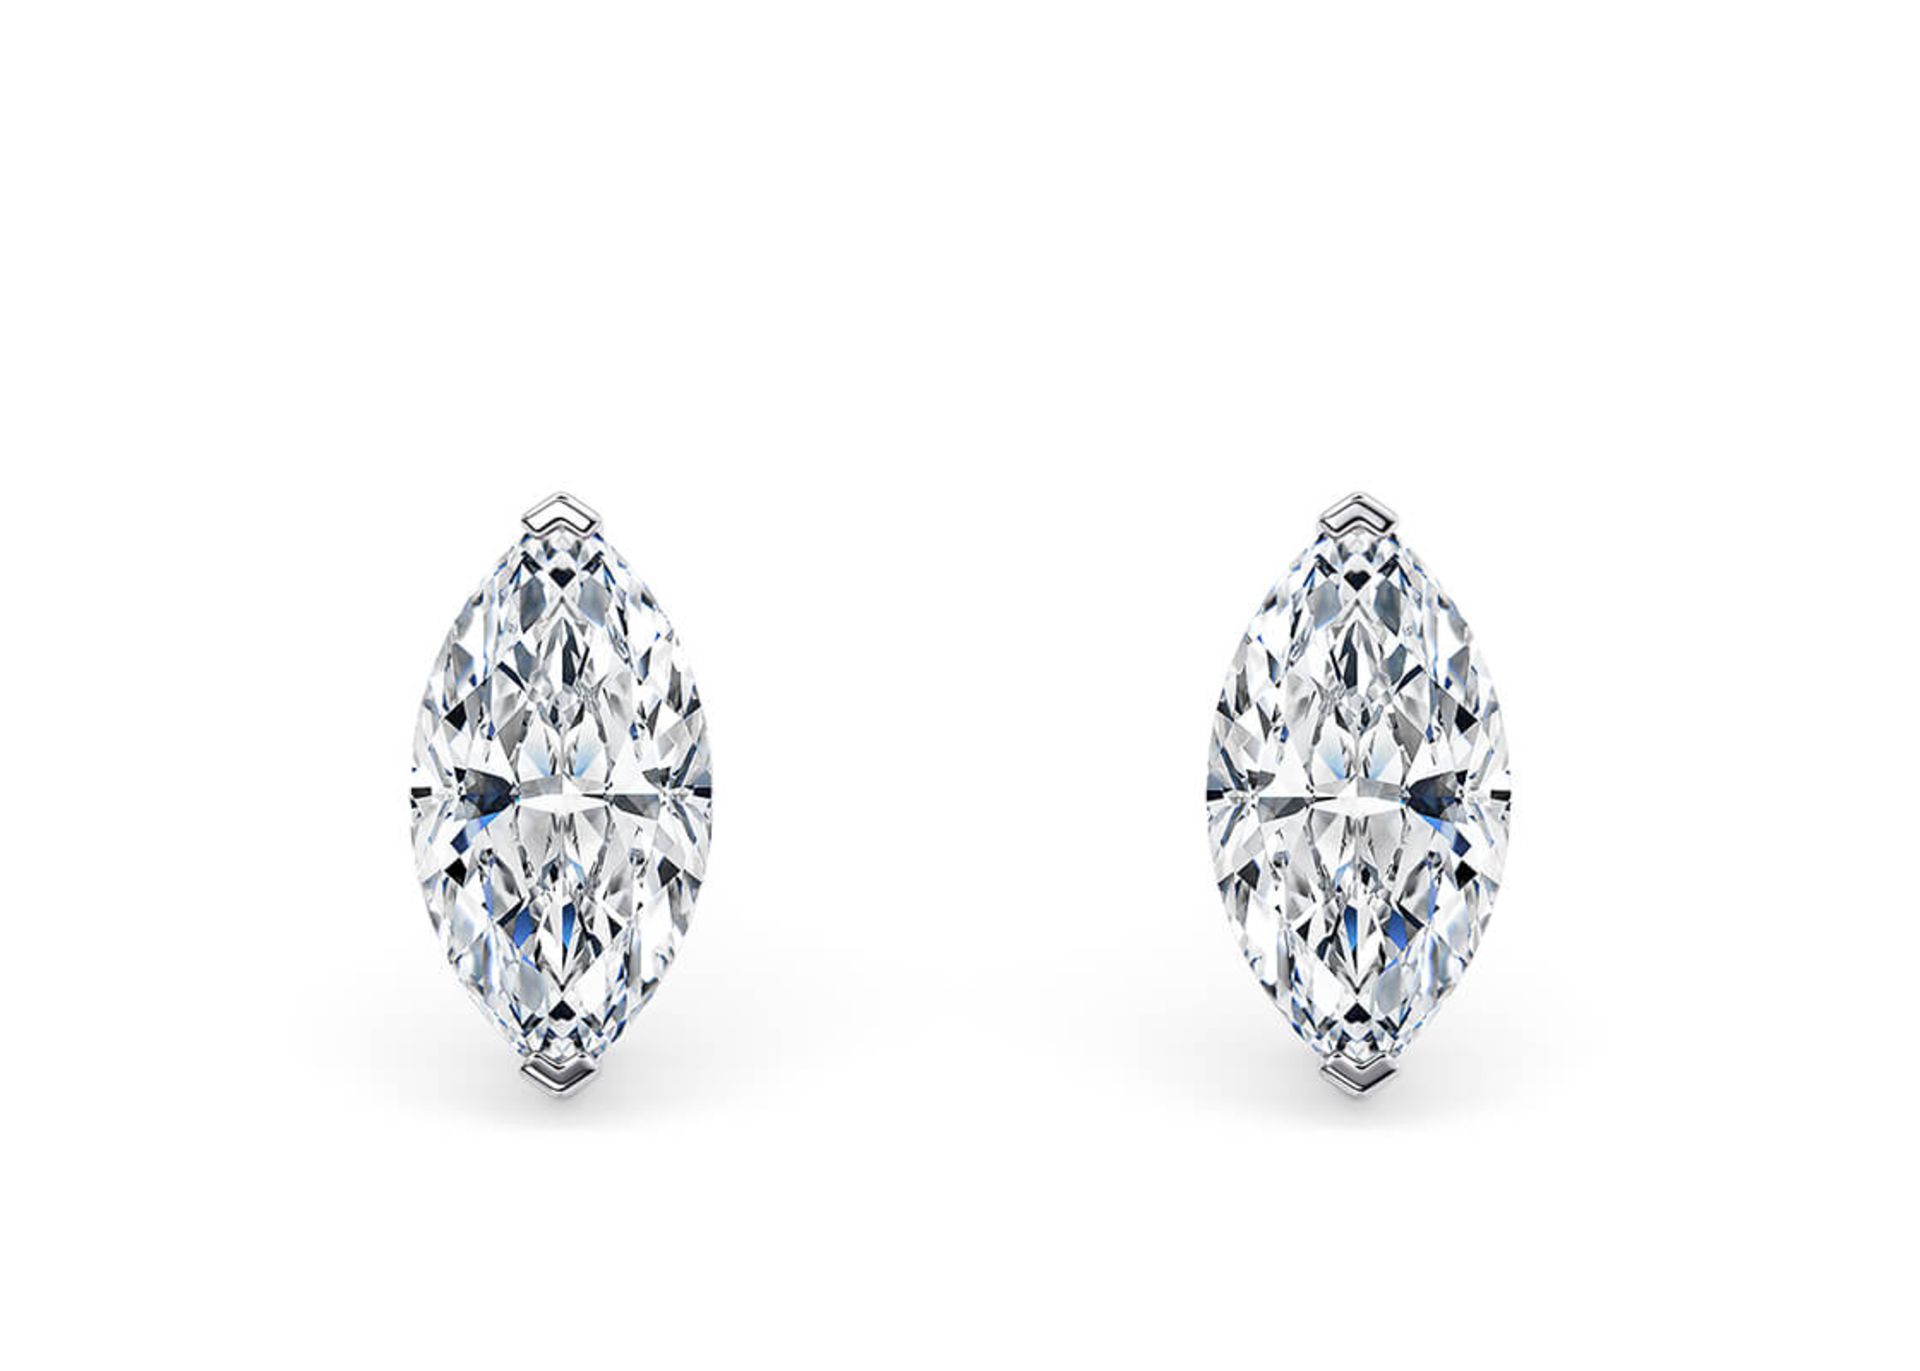 Marquise Cut 2.00 Carat Diamond 18kt White Gold Earrings- D Colour VVS Clarity IGI